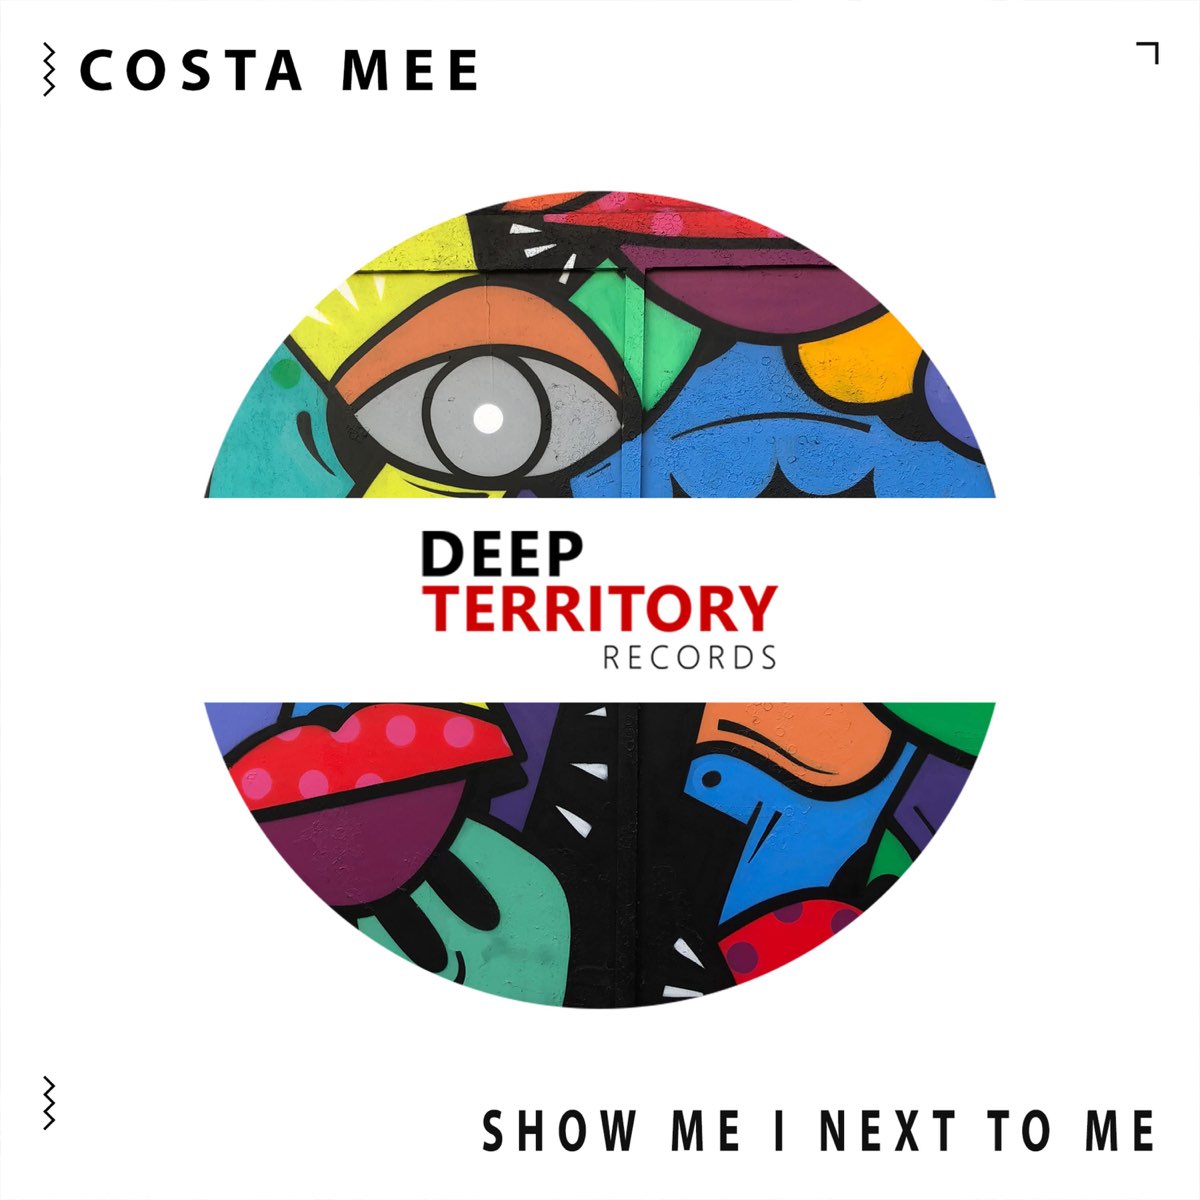 Costa mee. Costa mee – emotions. Remembering your Touch (Original Mix) - Costa mee. Costa mee - Love in Undercover (Original Mix).